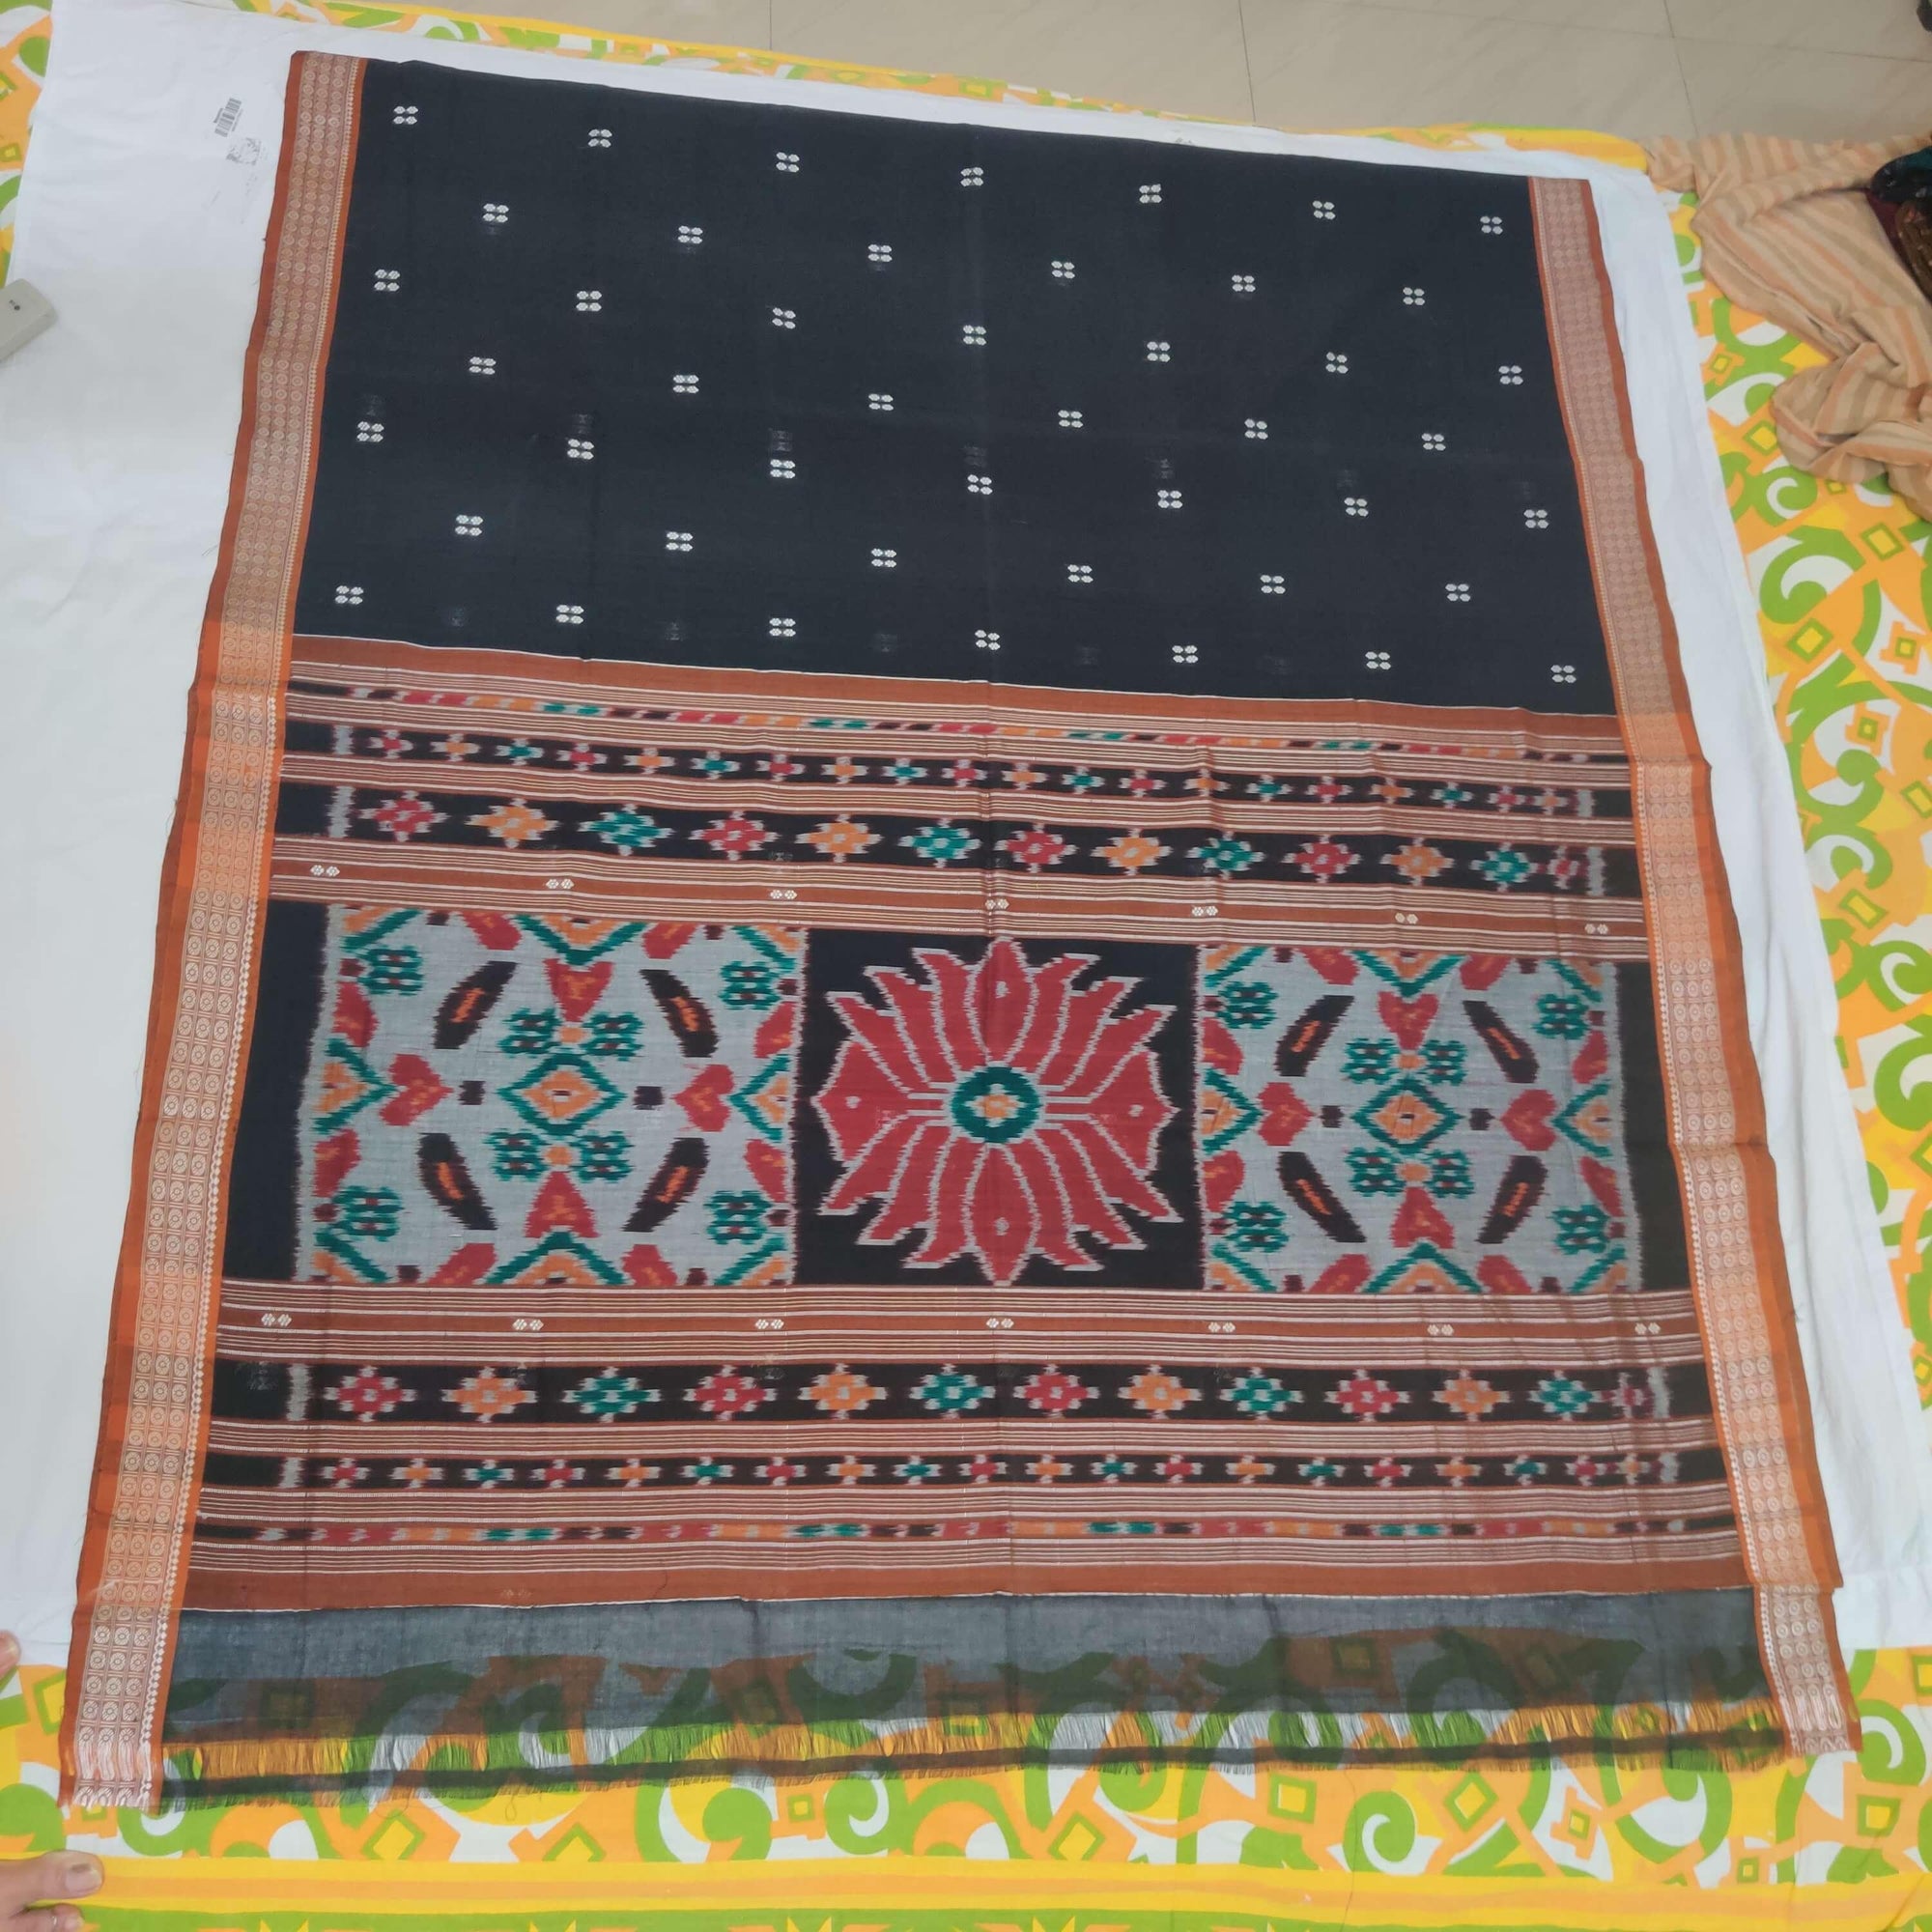 Black Cotton Sambalpuri Saree with matching Sambalpuri Blouse - Crafts Collection